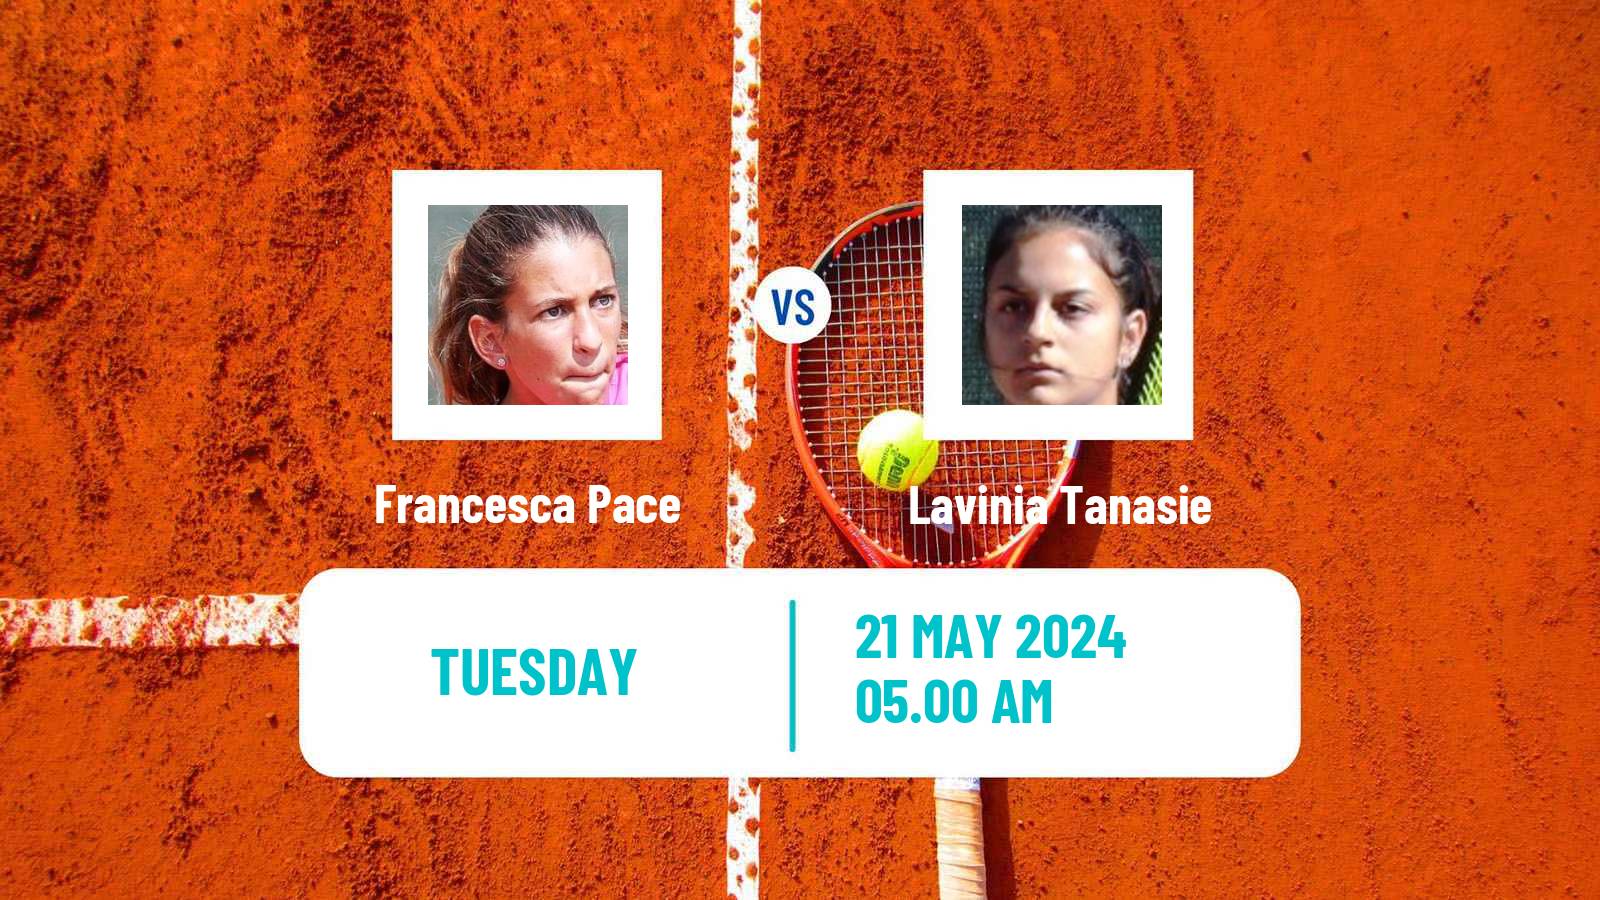 Tennis ITF W15 Bucharest 2 Women Francesca Pace - Lavinia Tanasie